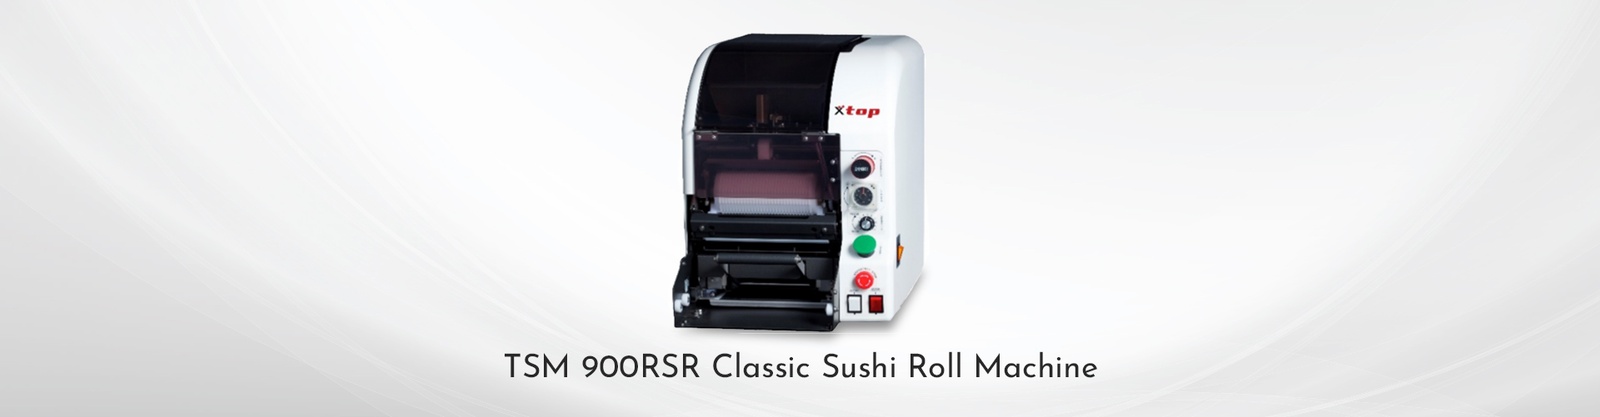 TSM 900RSR Classic Sushi Roll Machine